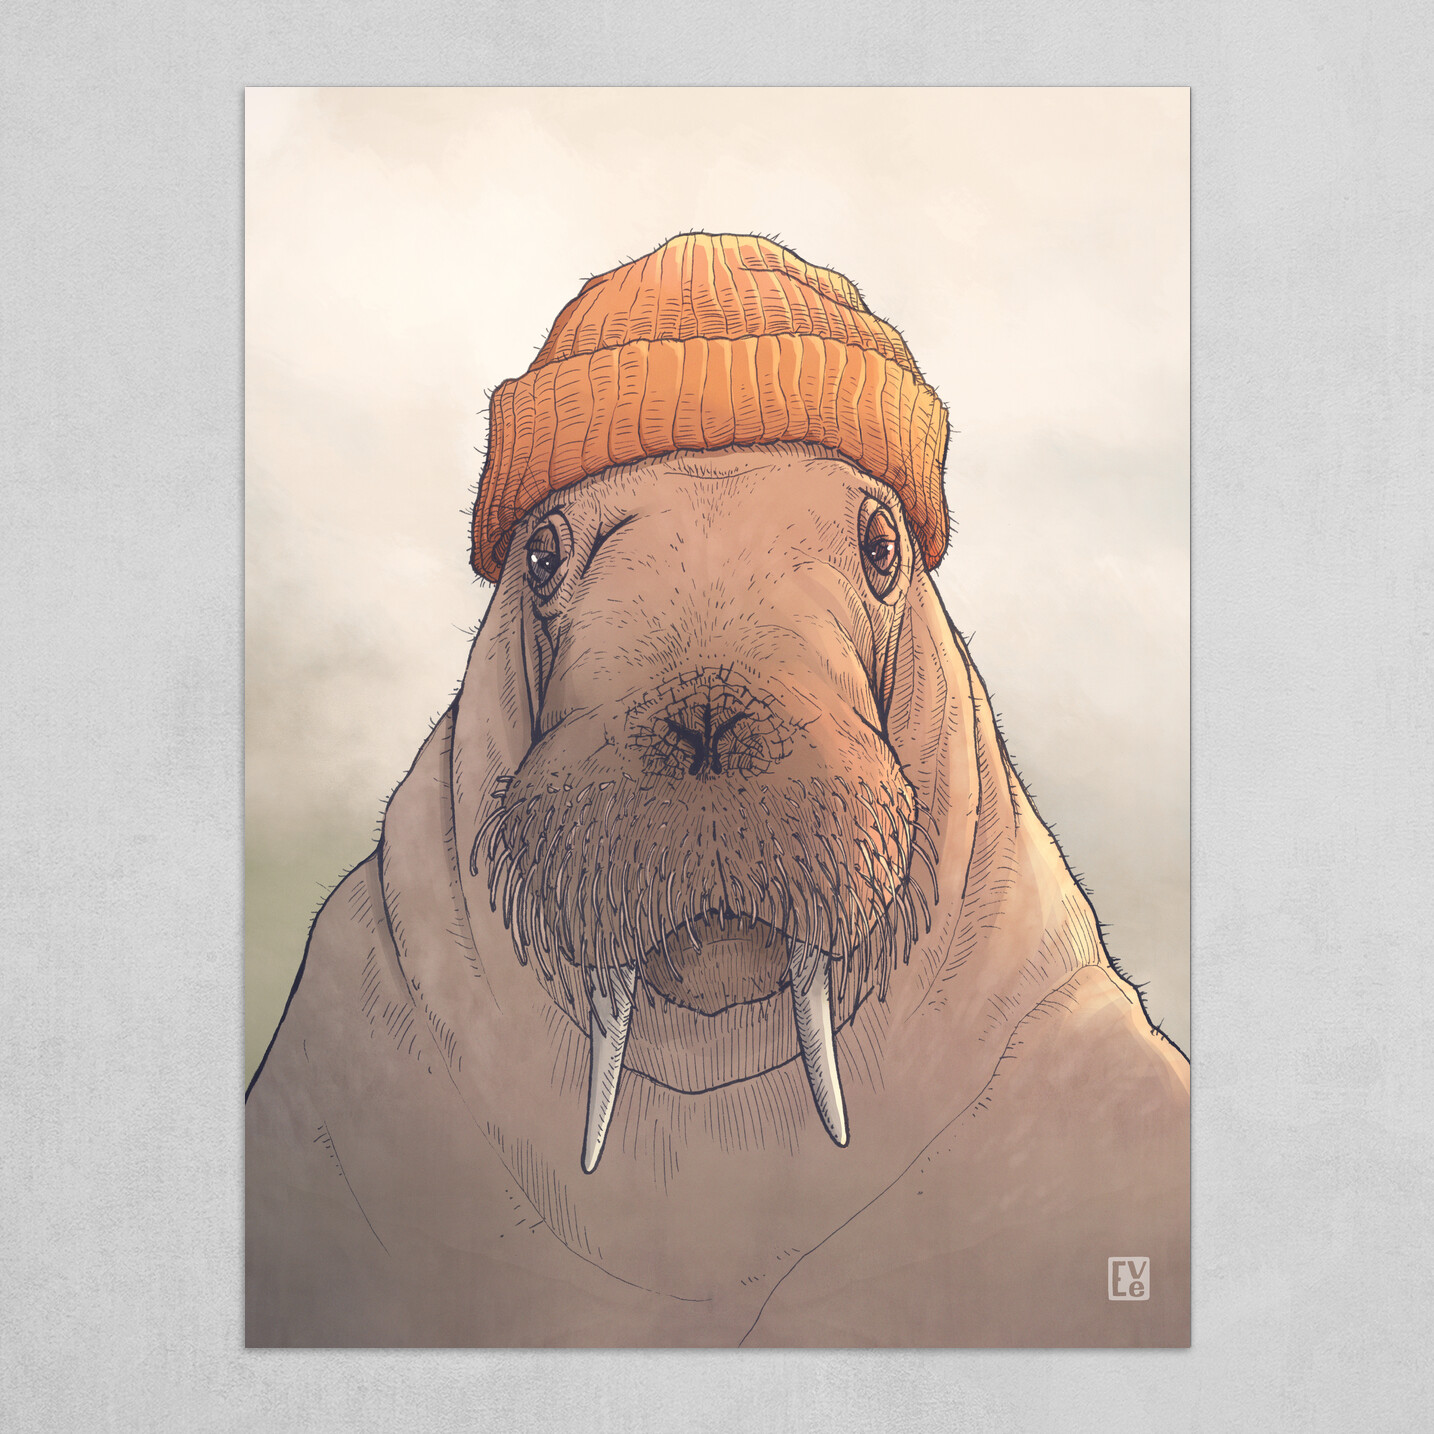 Walter the Walrus